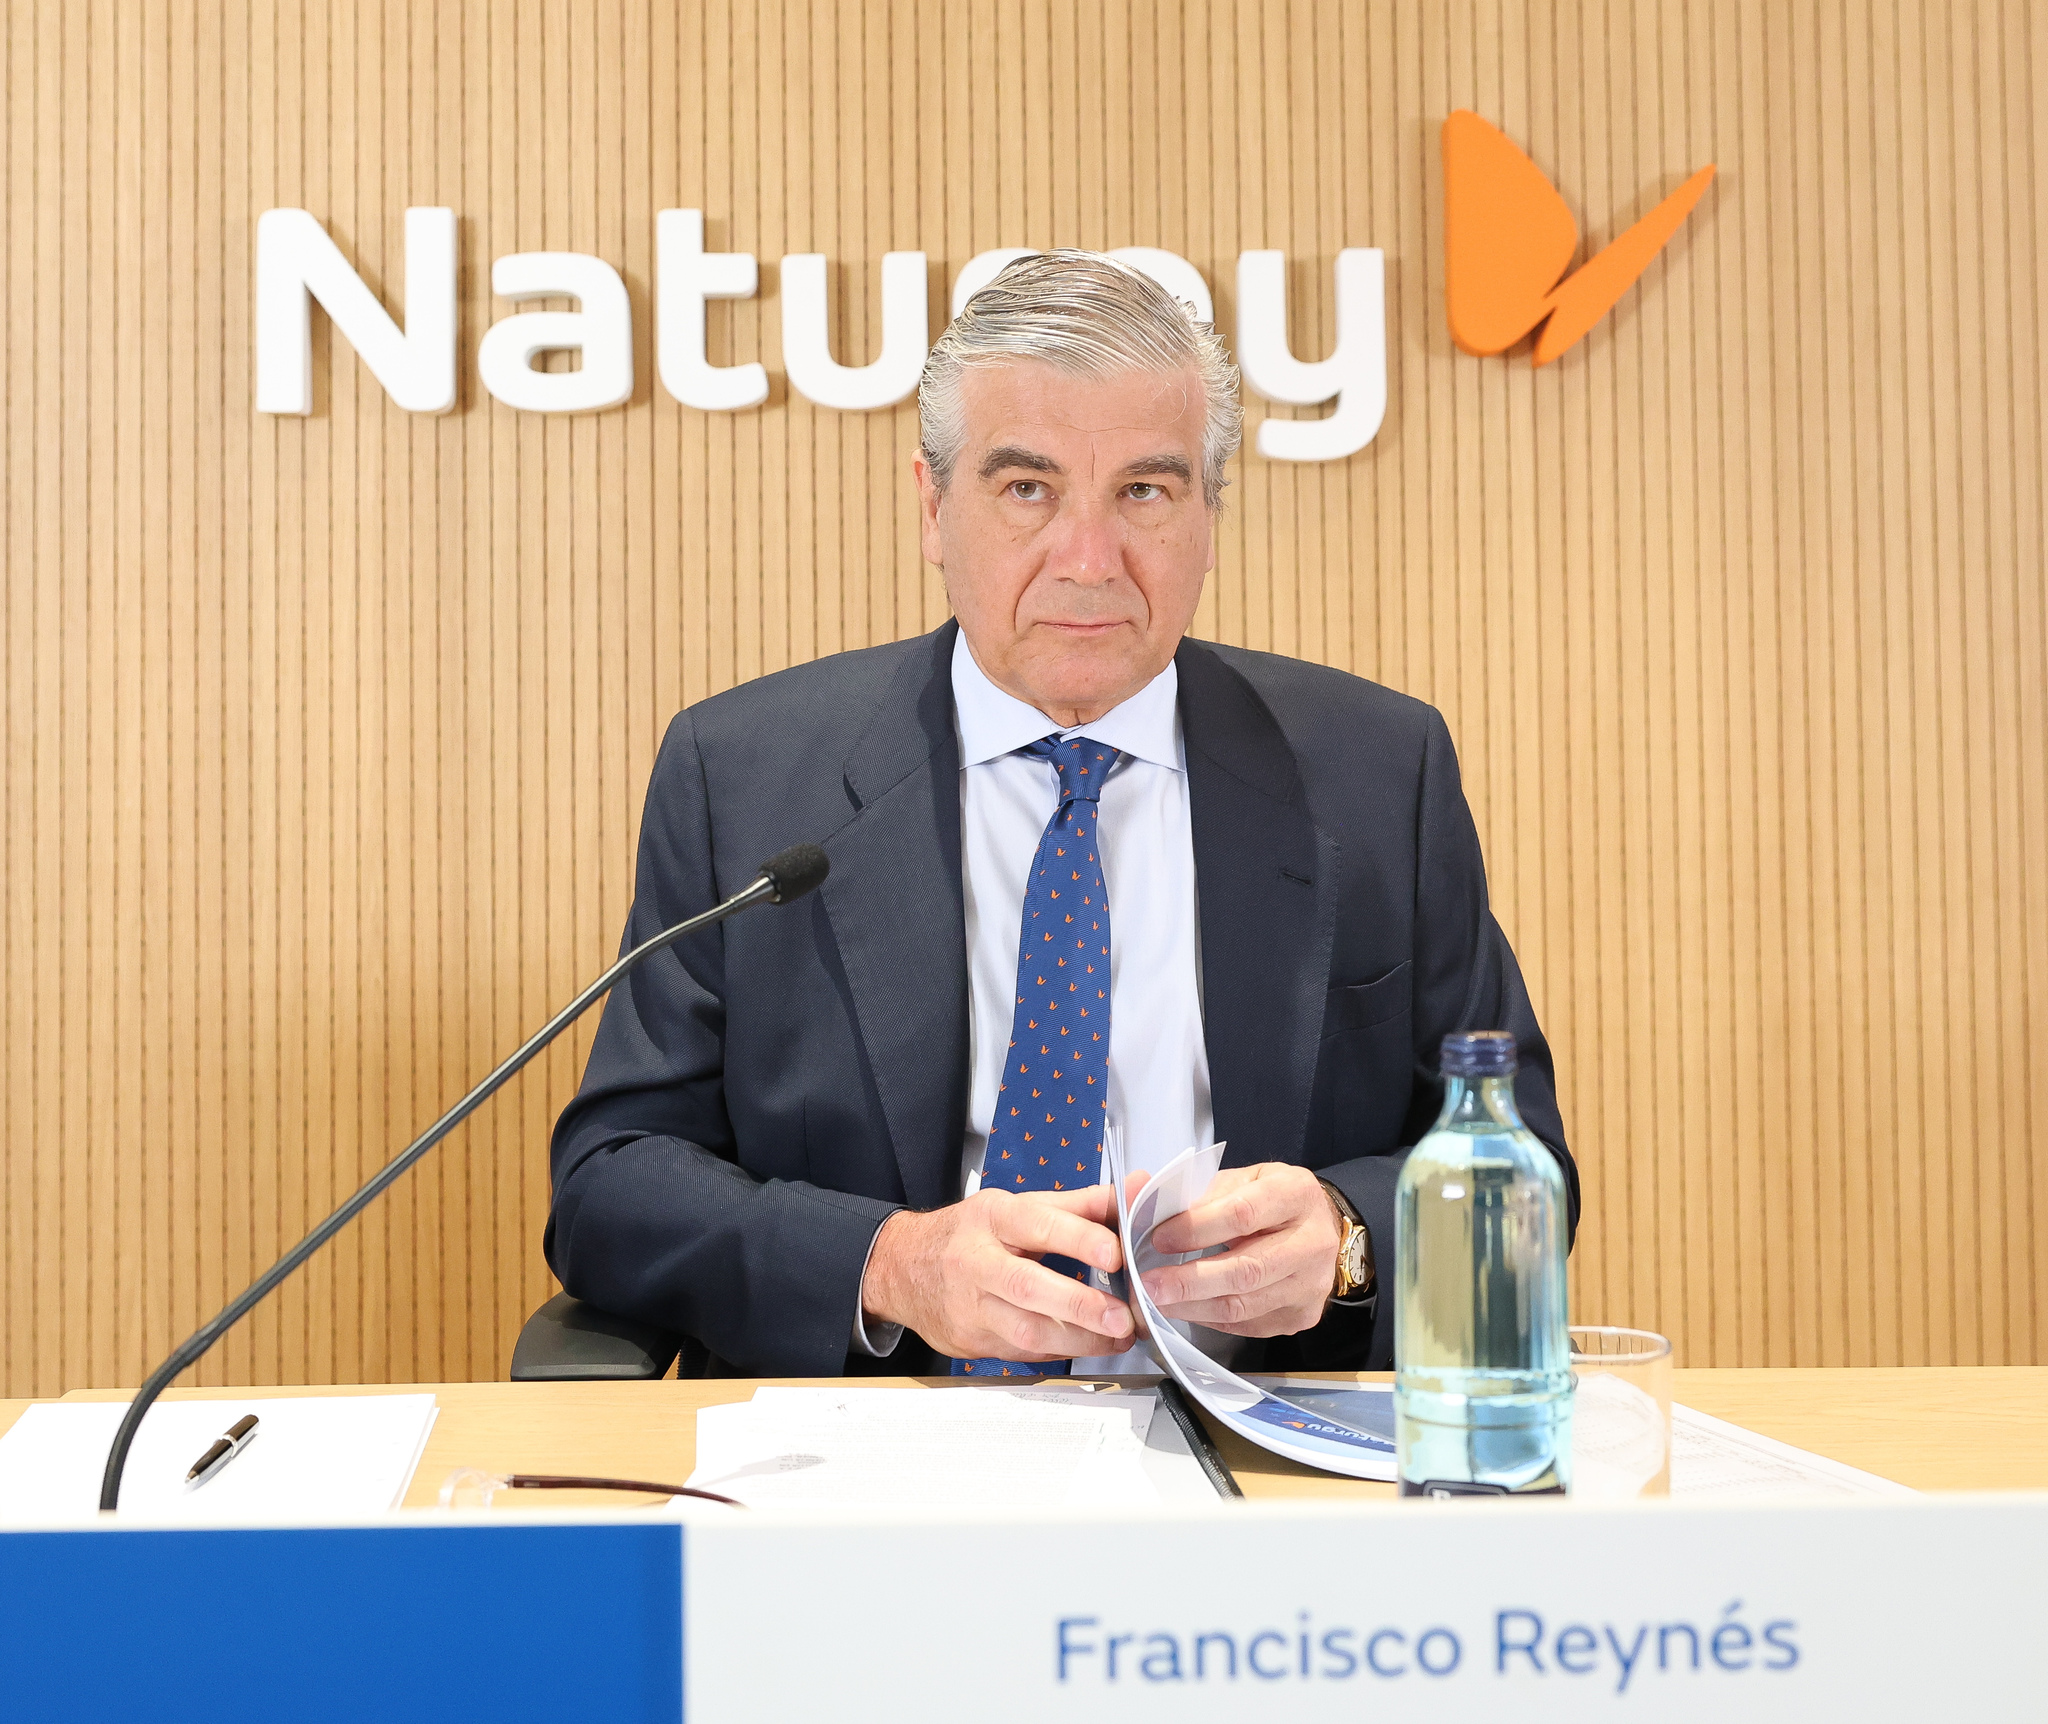 Francisco Reyn�s es presidente ejecutivo de Naturgy.